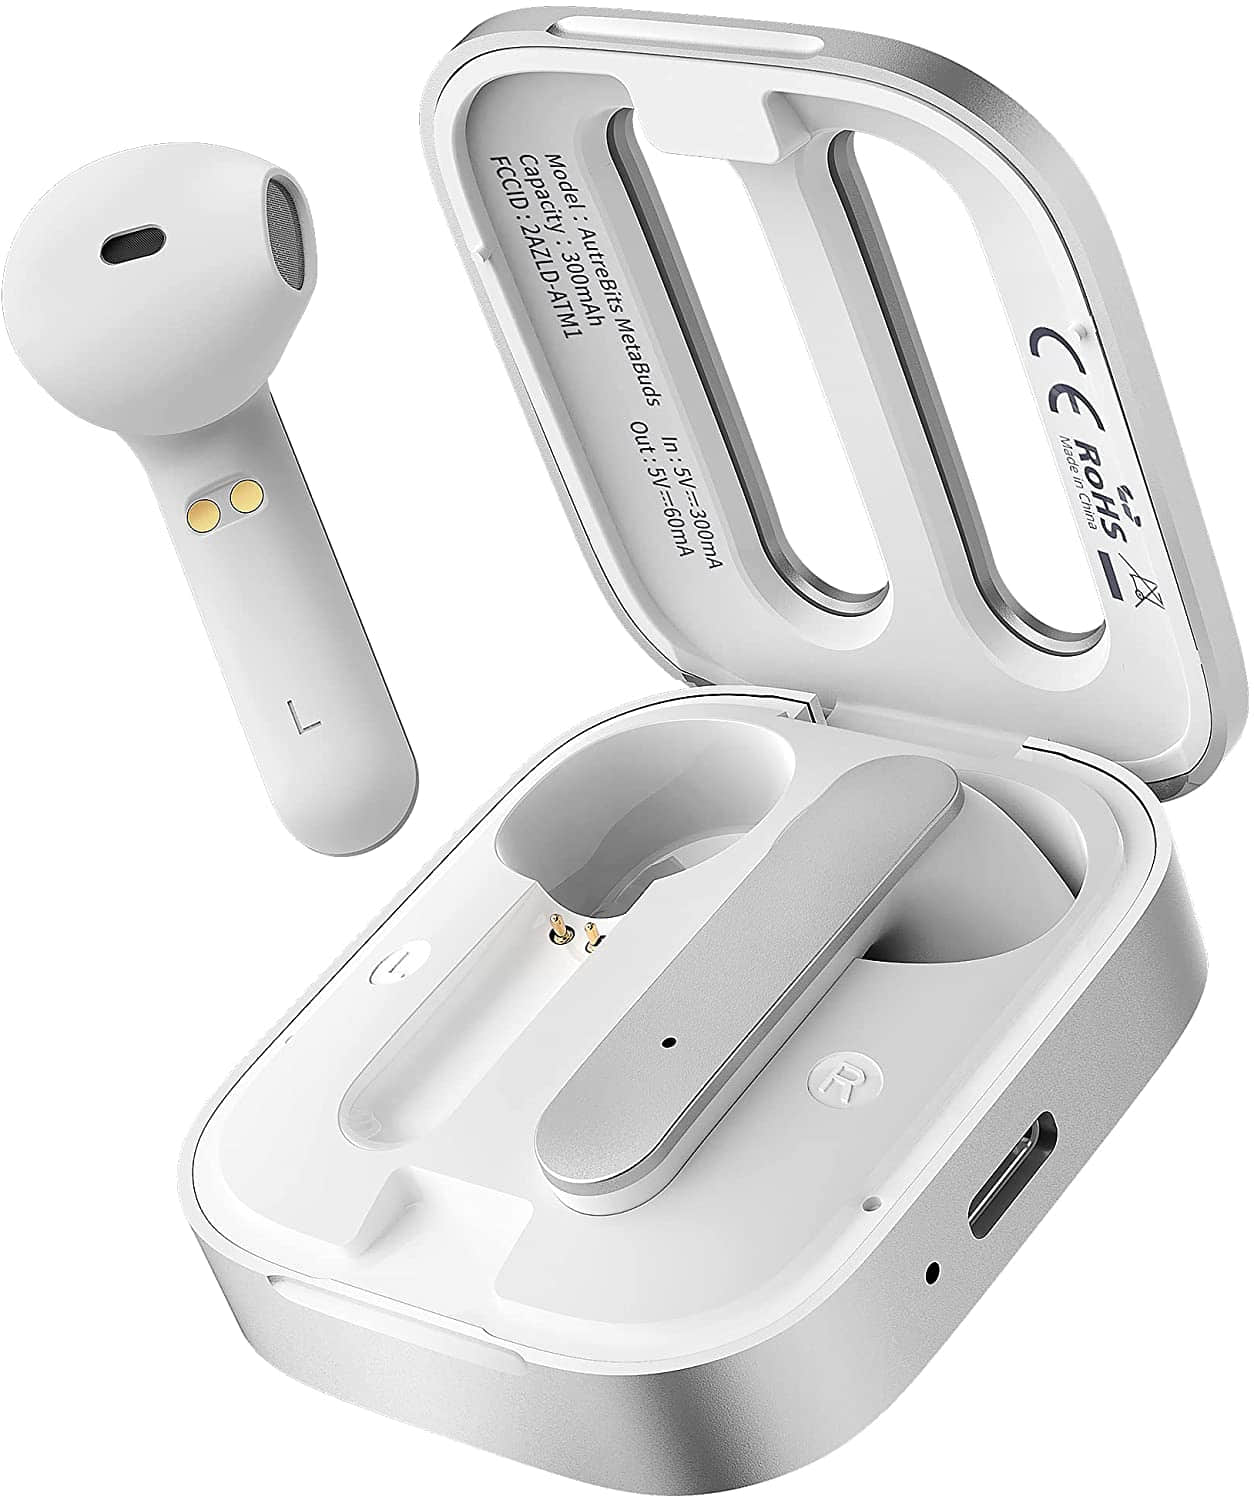 Wireless Earbuds Half-in-Ear Design with Metallic Case & IPX5 Waterproof (Black & Sliver)